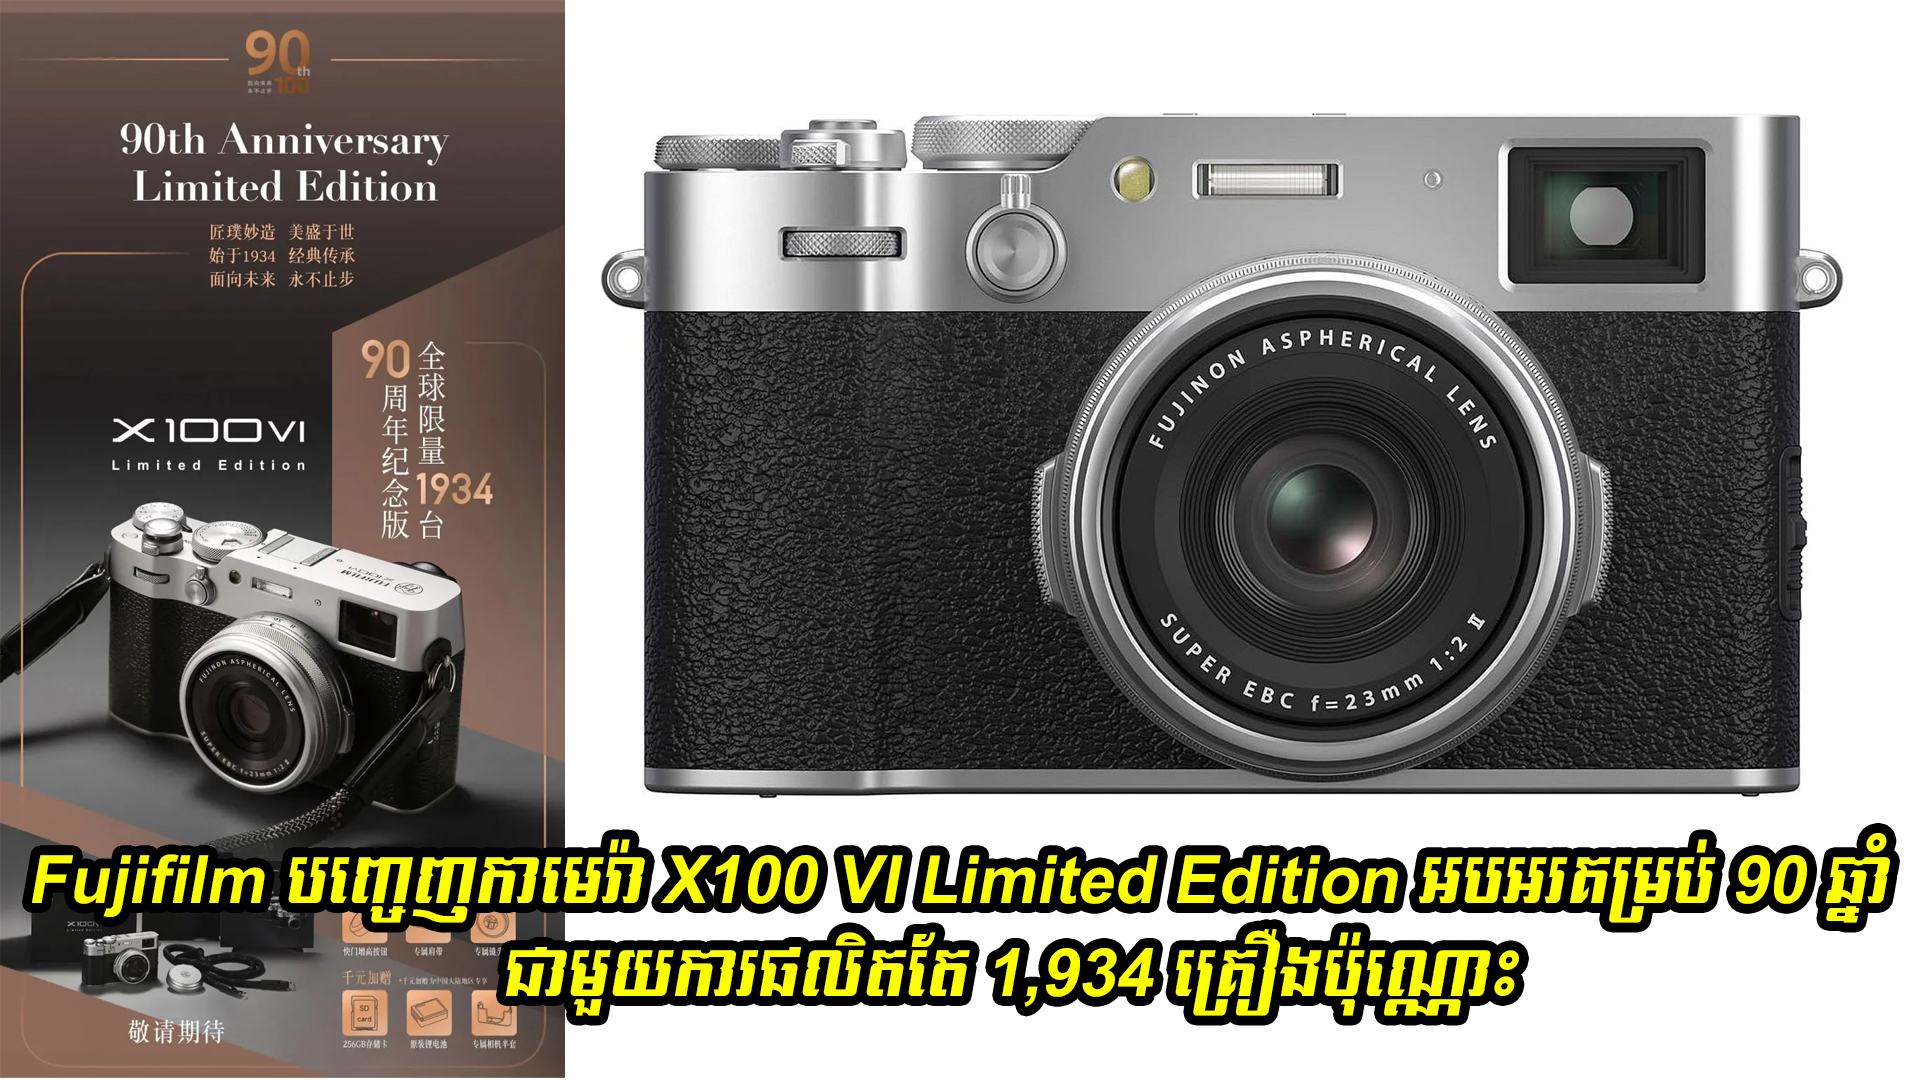 Fujifilm បញ្ចេញកាមេរ៉ា X100 VI Limited Edition ដើម្បីអបអរថ្ងៃខួបគម្រប់ 90 ឆ្នាំ ជាមួយការផលិតតែ 1,934 គ្រឿងប៉ុណ្ណោះ